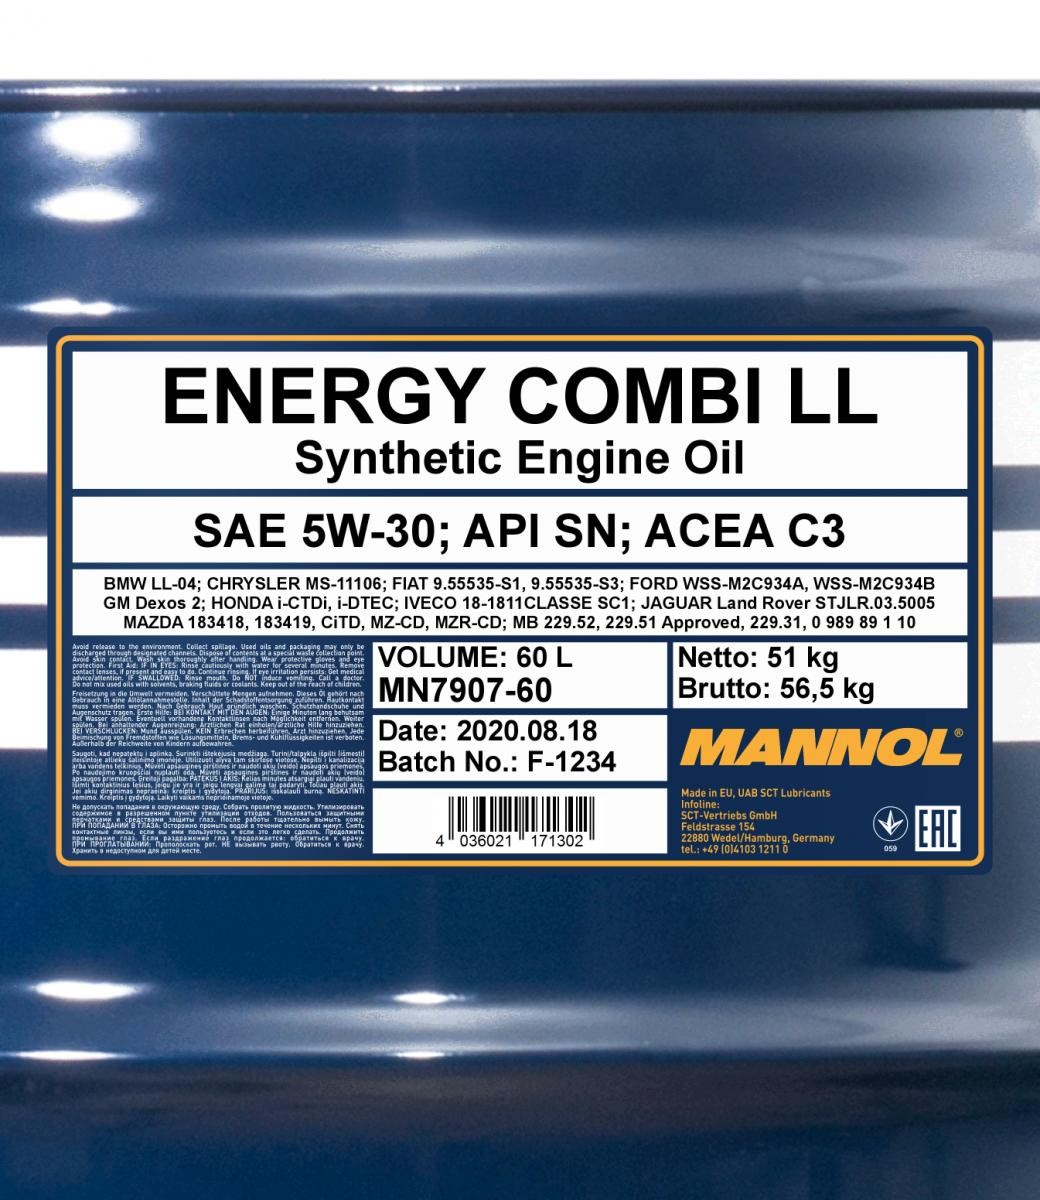 5W-30 Mannol 7907 Energy Combi LL LongLife Motoröl 60 Liter